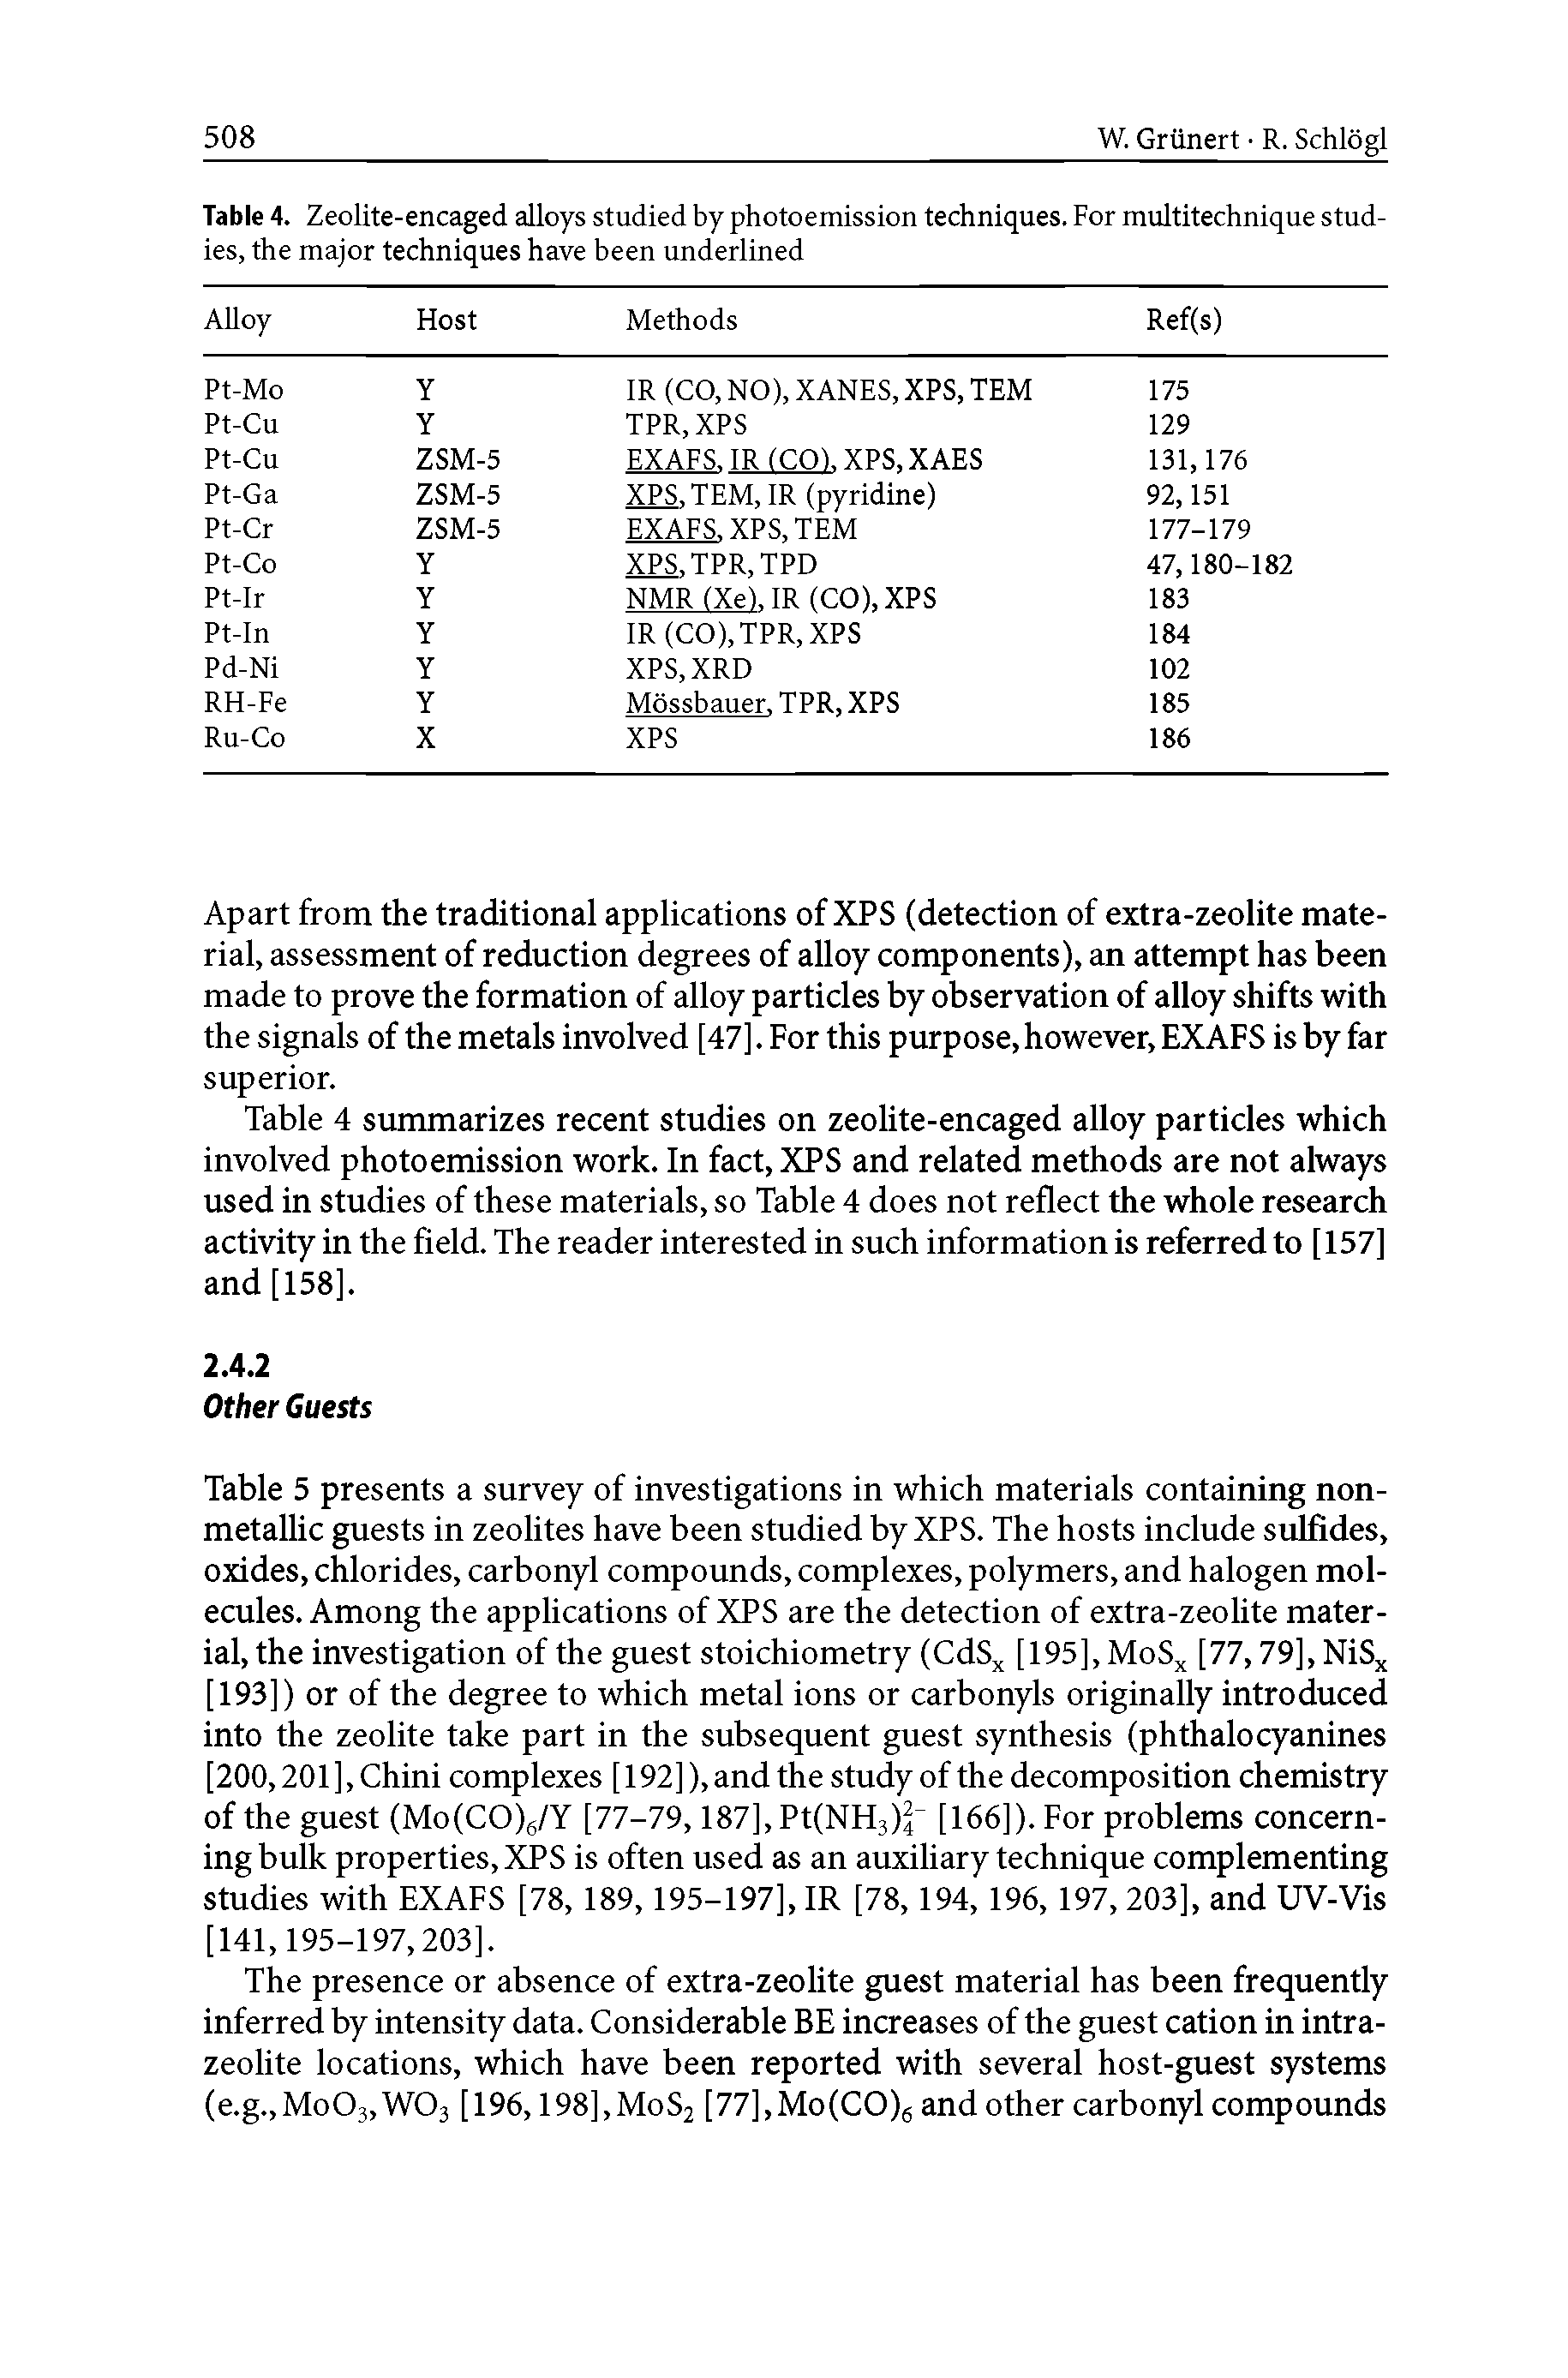 Table 4. Zeolite-encaged alloys studied by photoemission techniques. For multitechnique studies, the major techniques have been underlined ...